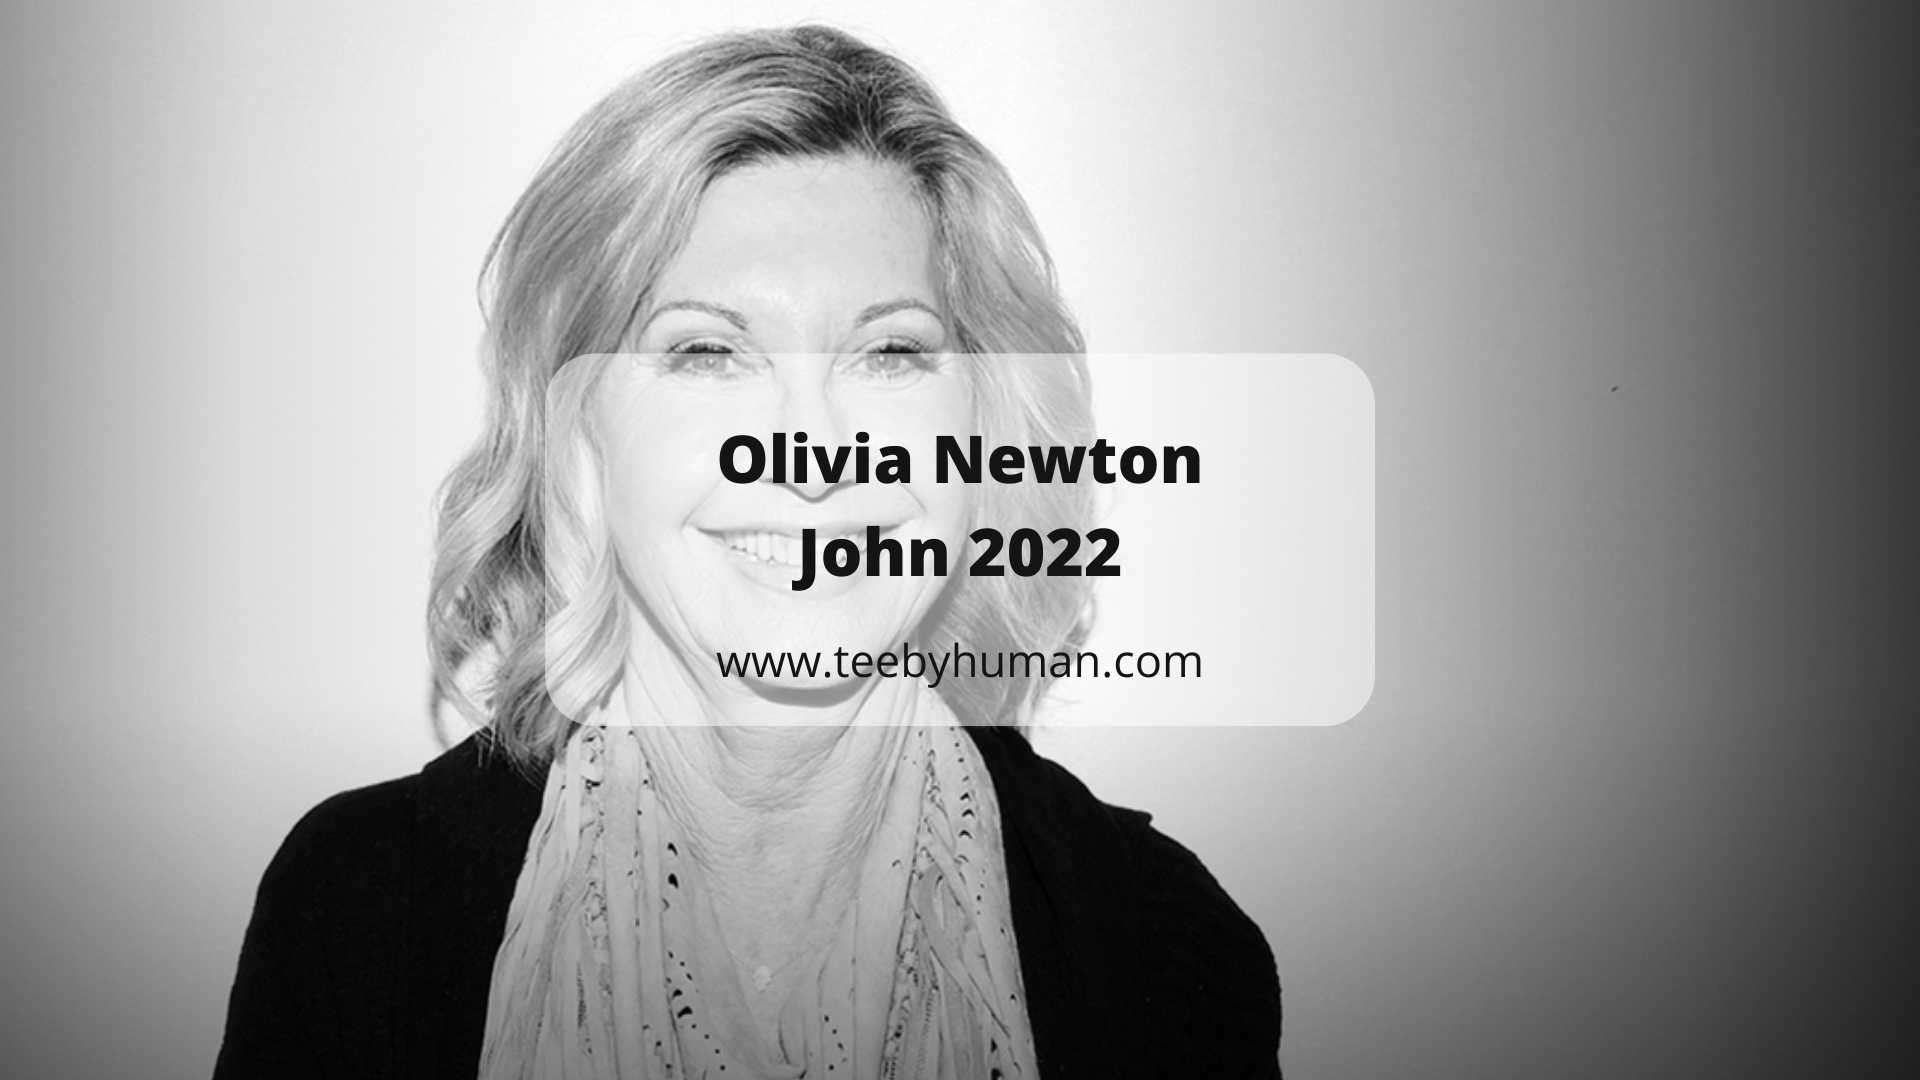 10 Items To Commemorating Olivia Newton John 2022